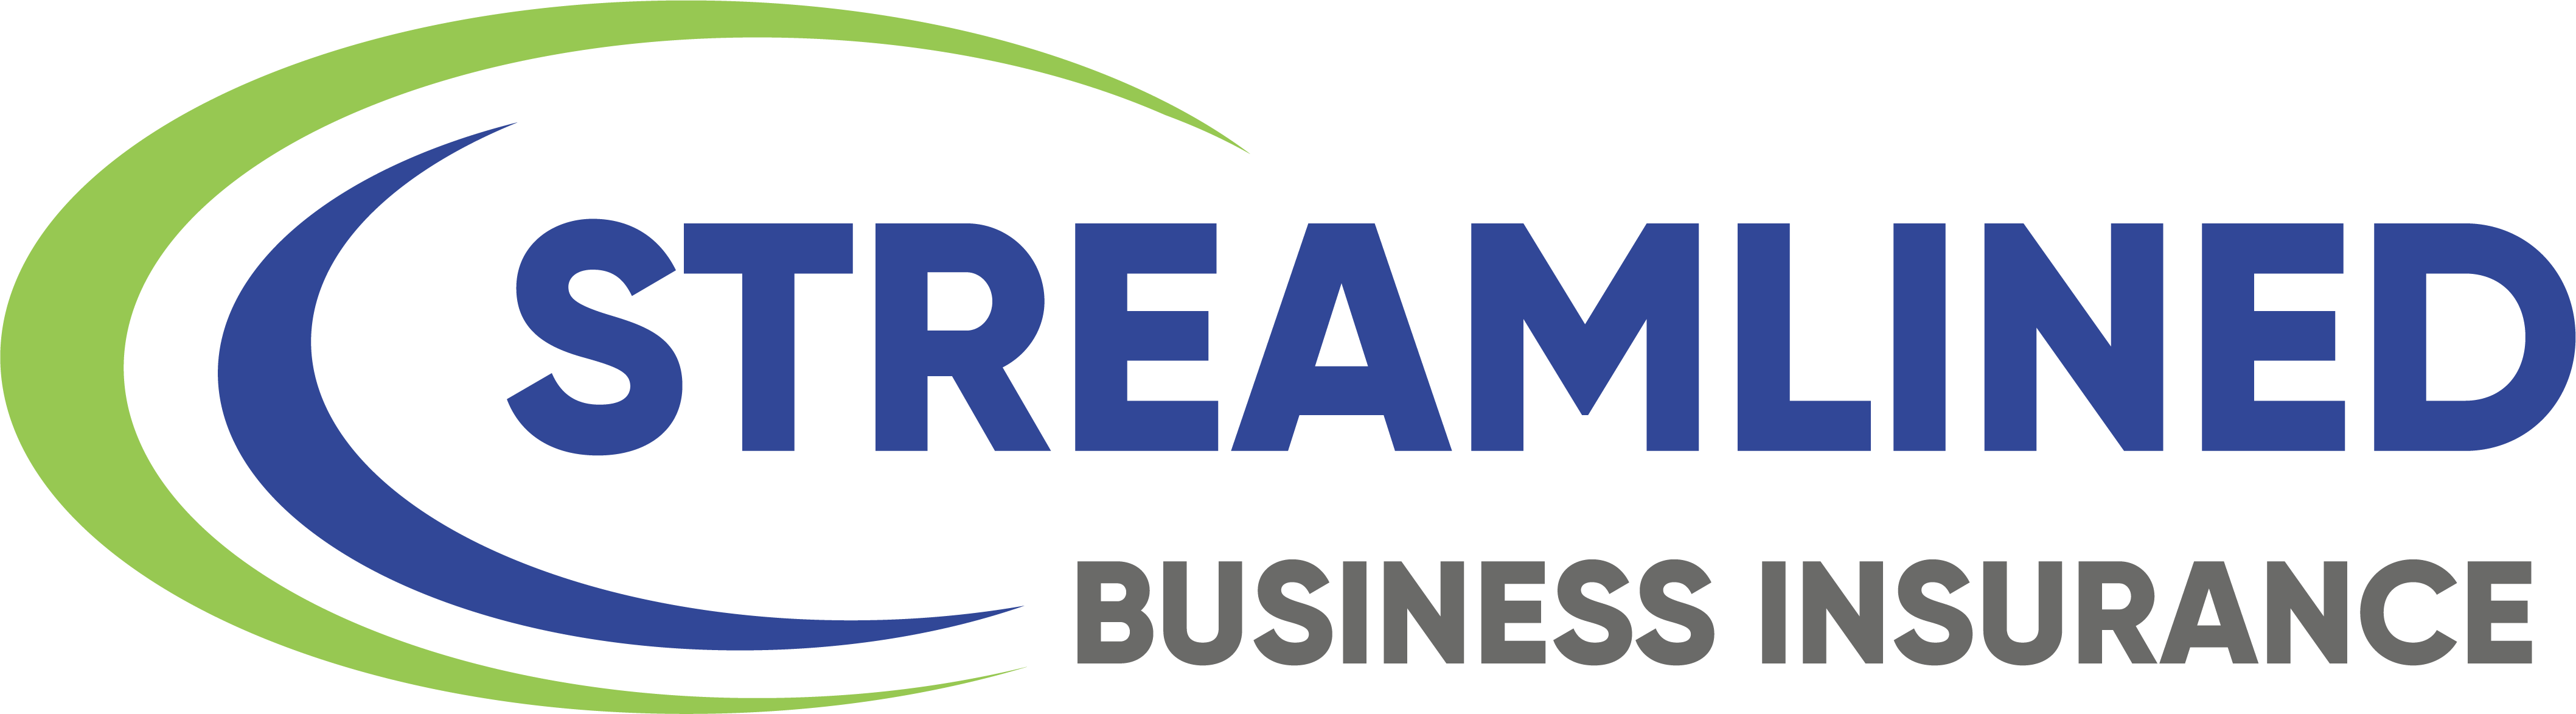 Streamlined Business Insurance logo